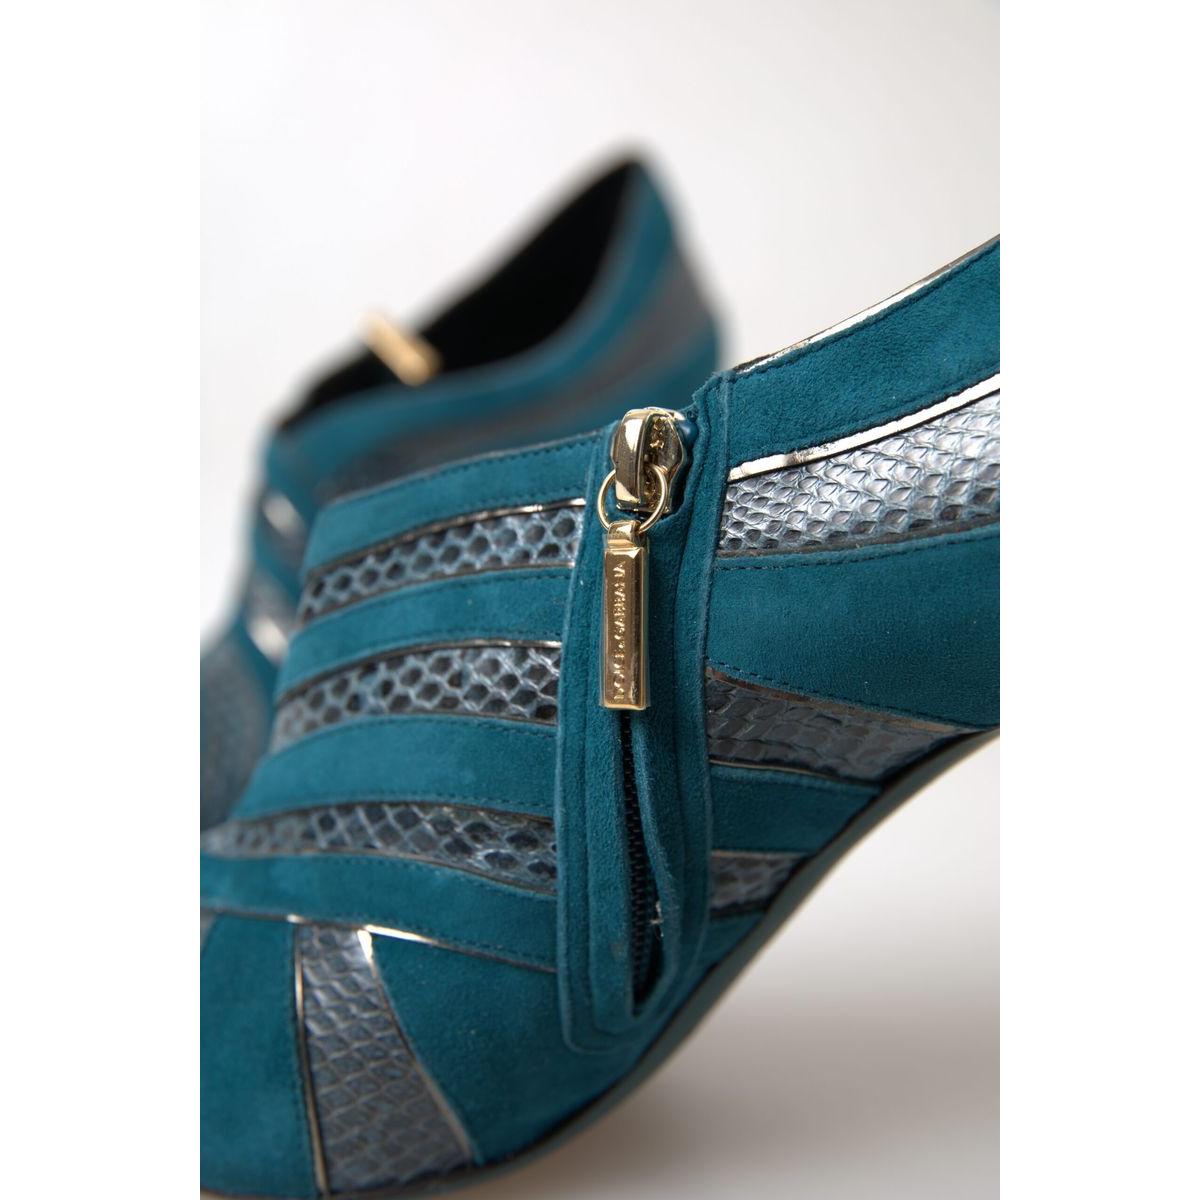 Dolce & Gabbana Chic Blue Peep Toe Stiletto Ankle Booties blue-teal-snakeskin-peep-toe-ankle-booties-shoes 465A8812-scaled-8d7ce495-b04_b7e38403-c9d2-4948-ae00-6d726e3c1fd5.jpg